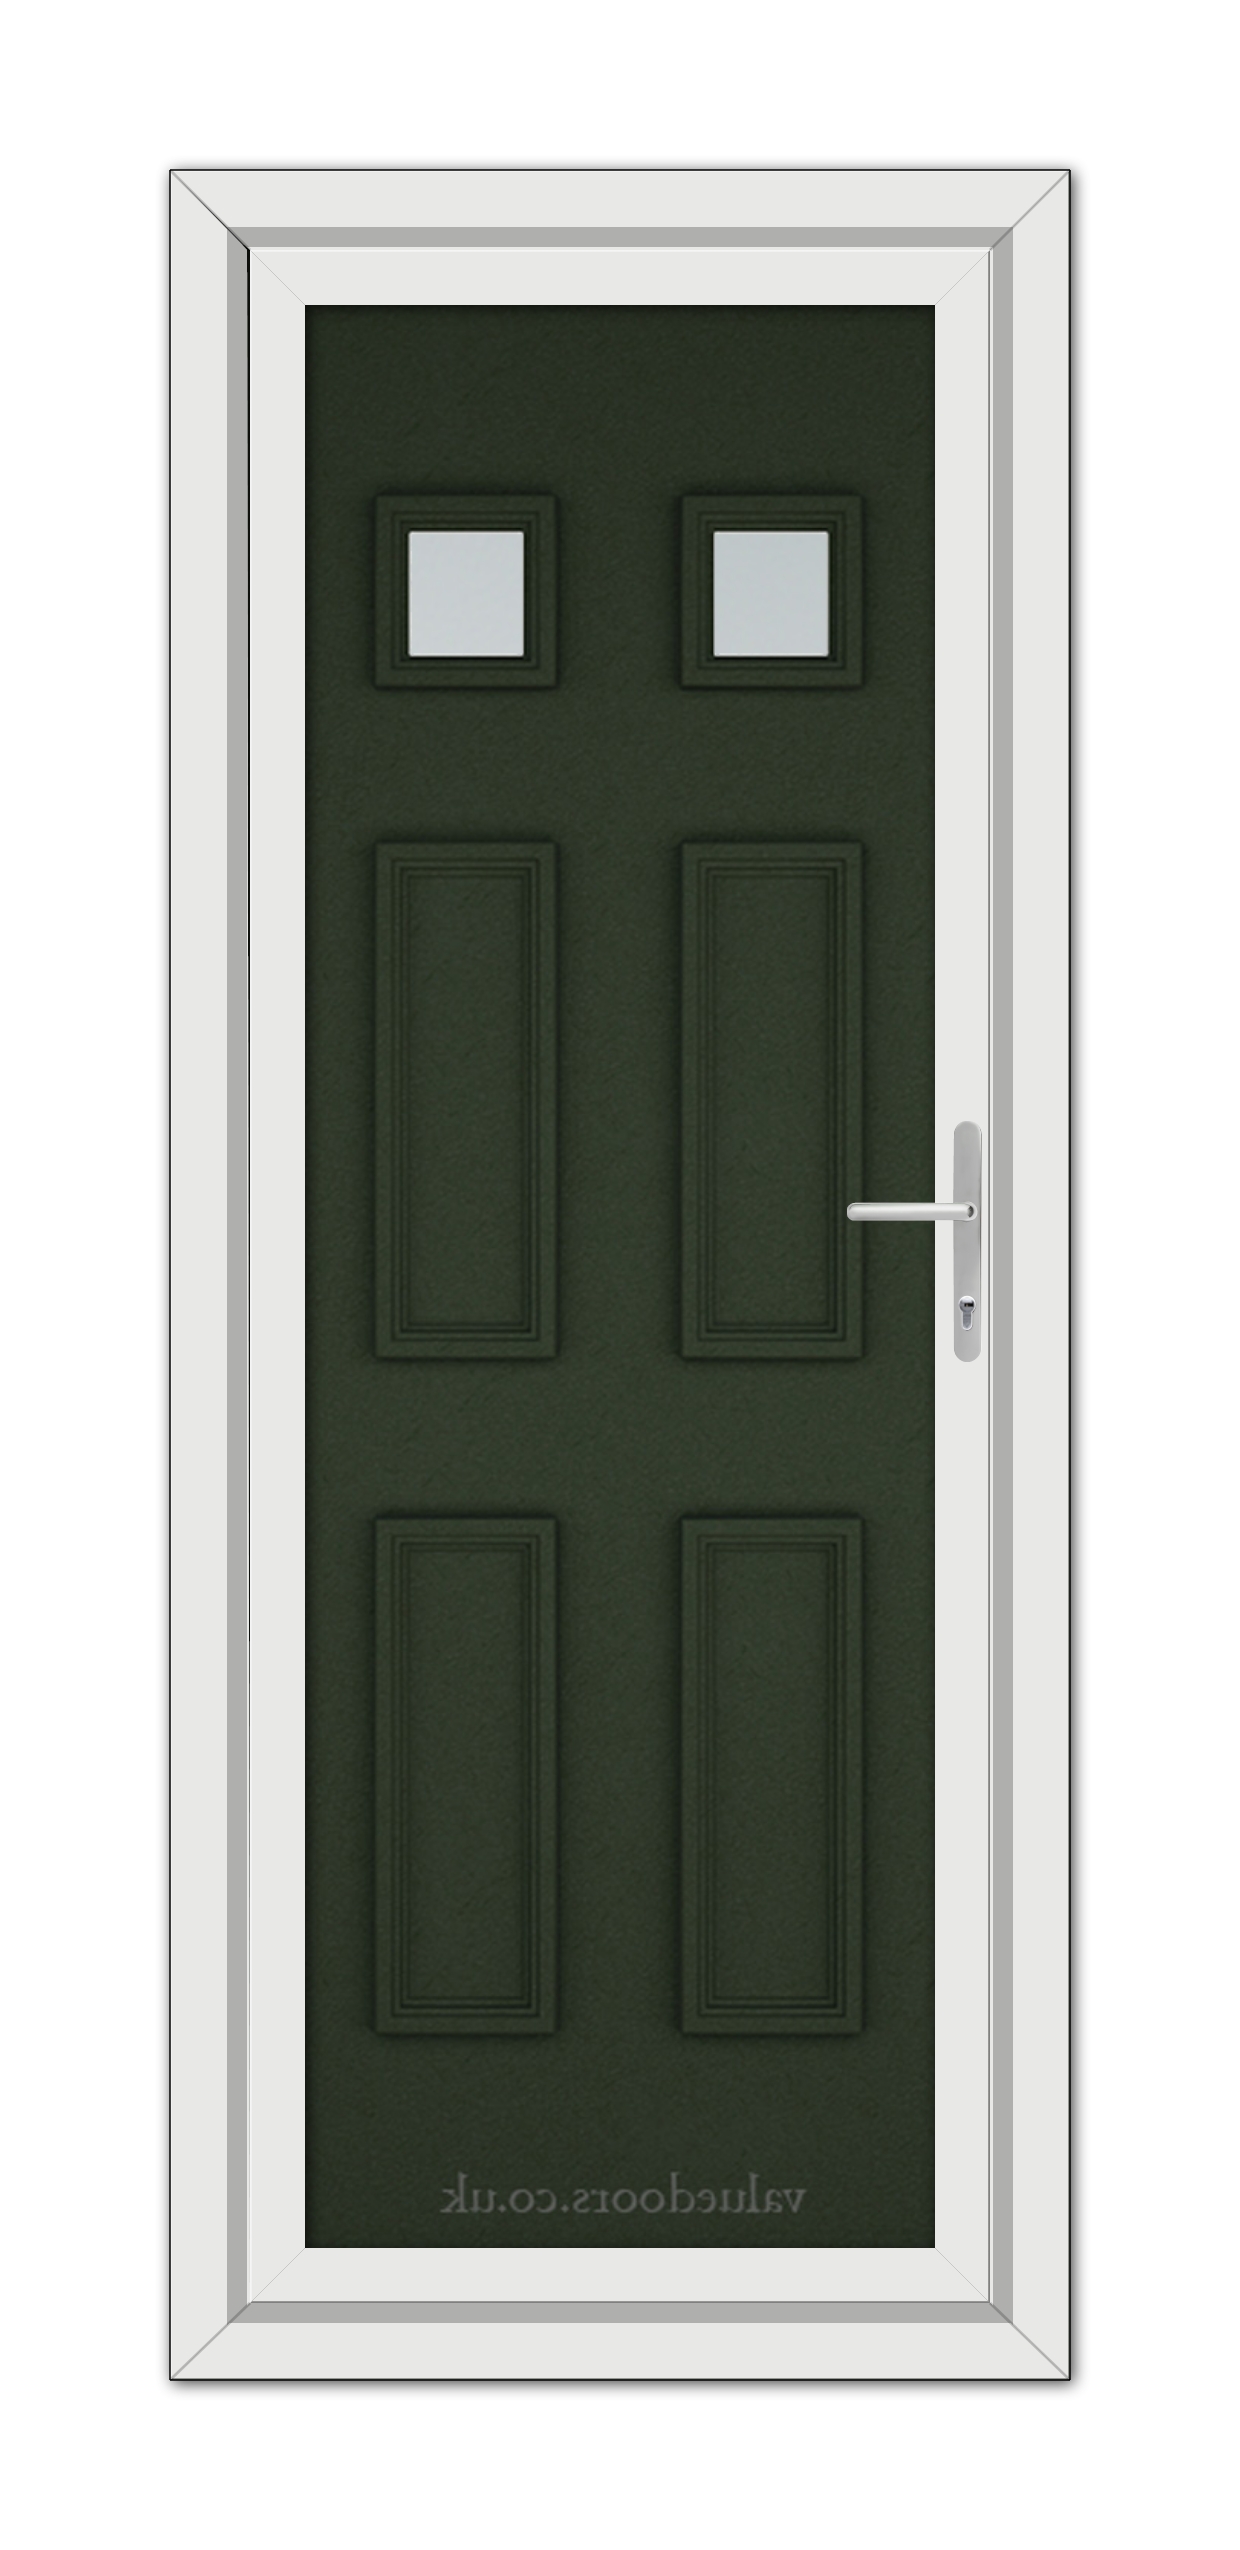 A close-up of a Green Windsor uPVC Door.